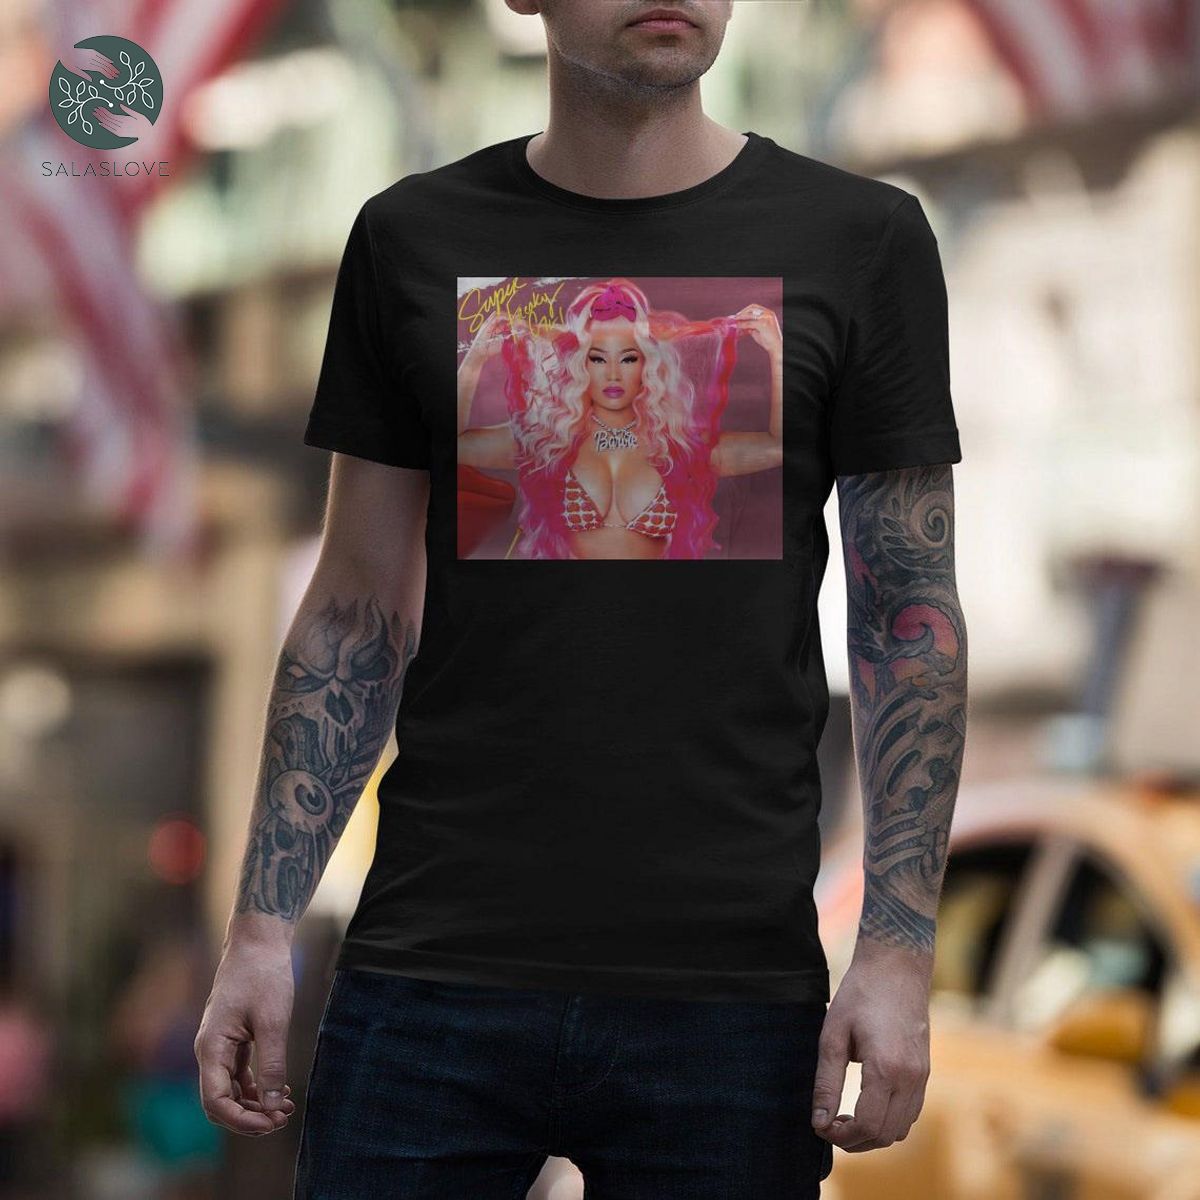 Super Freaky Girl Nicki Minaj T-shirt